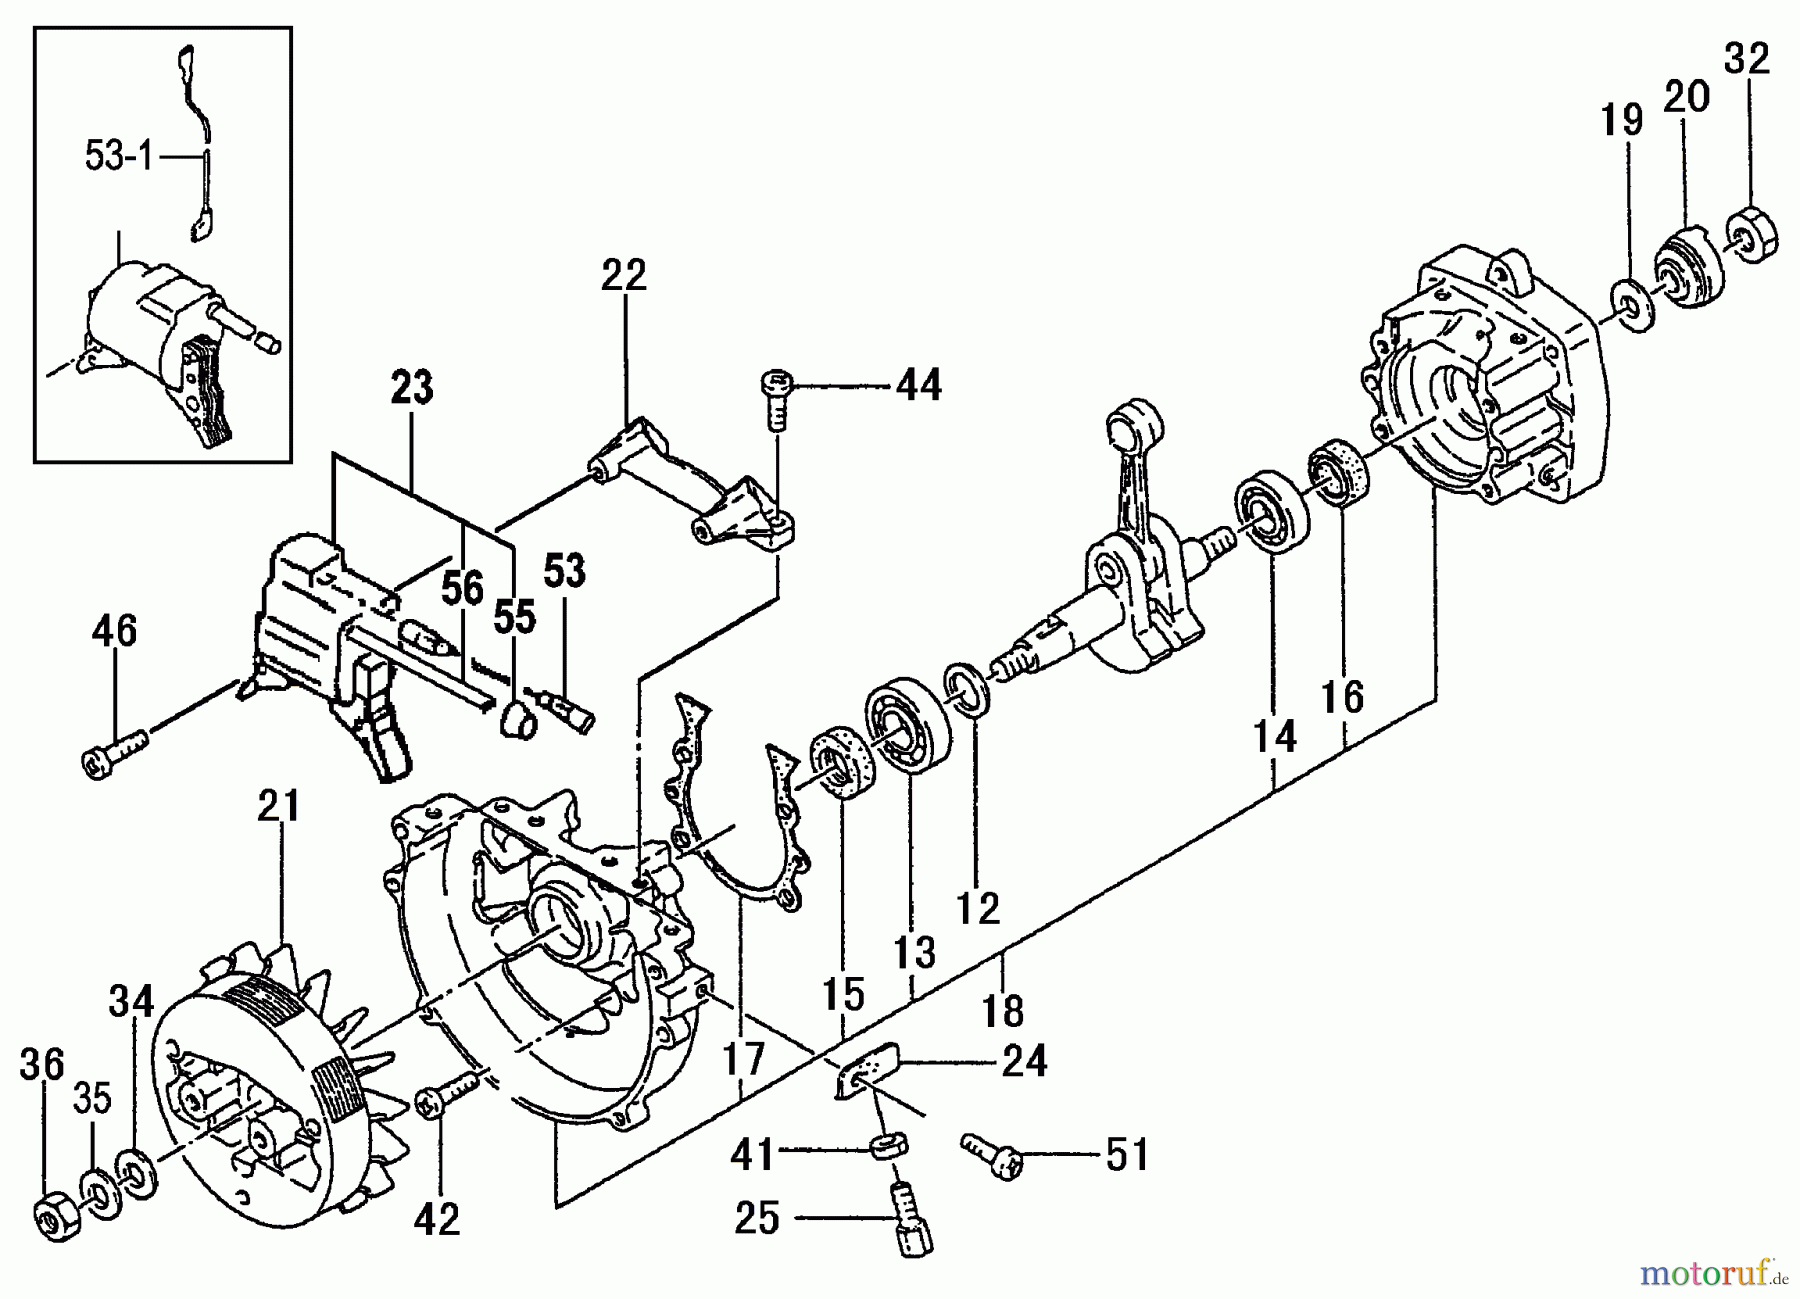  Tanaka Erdbohrer TED-262DH - Tanaka Portable Gas Drill Crankcase, Flywheel, Ignition